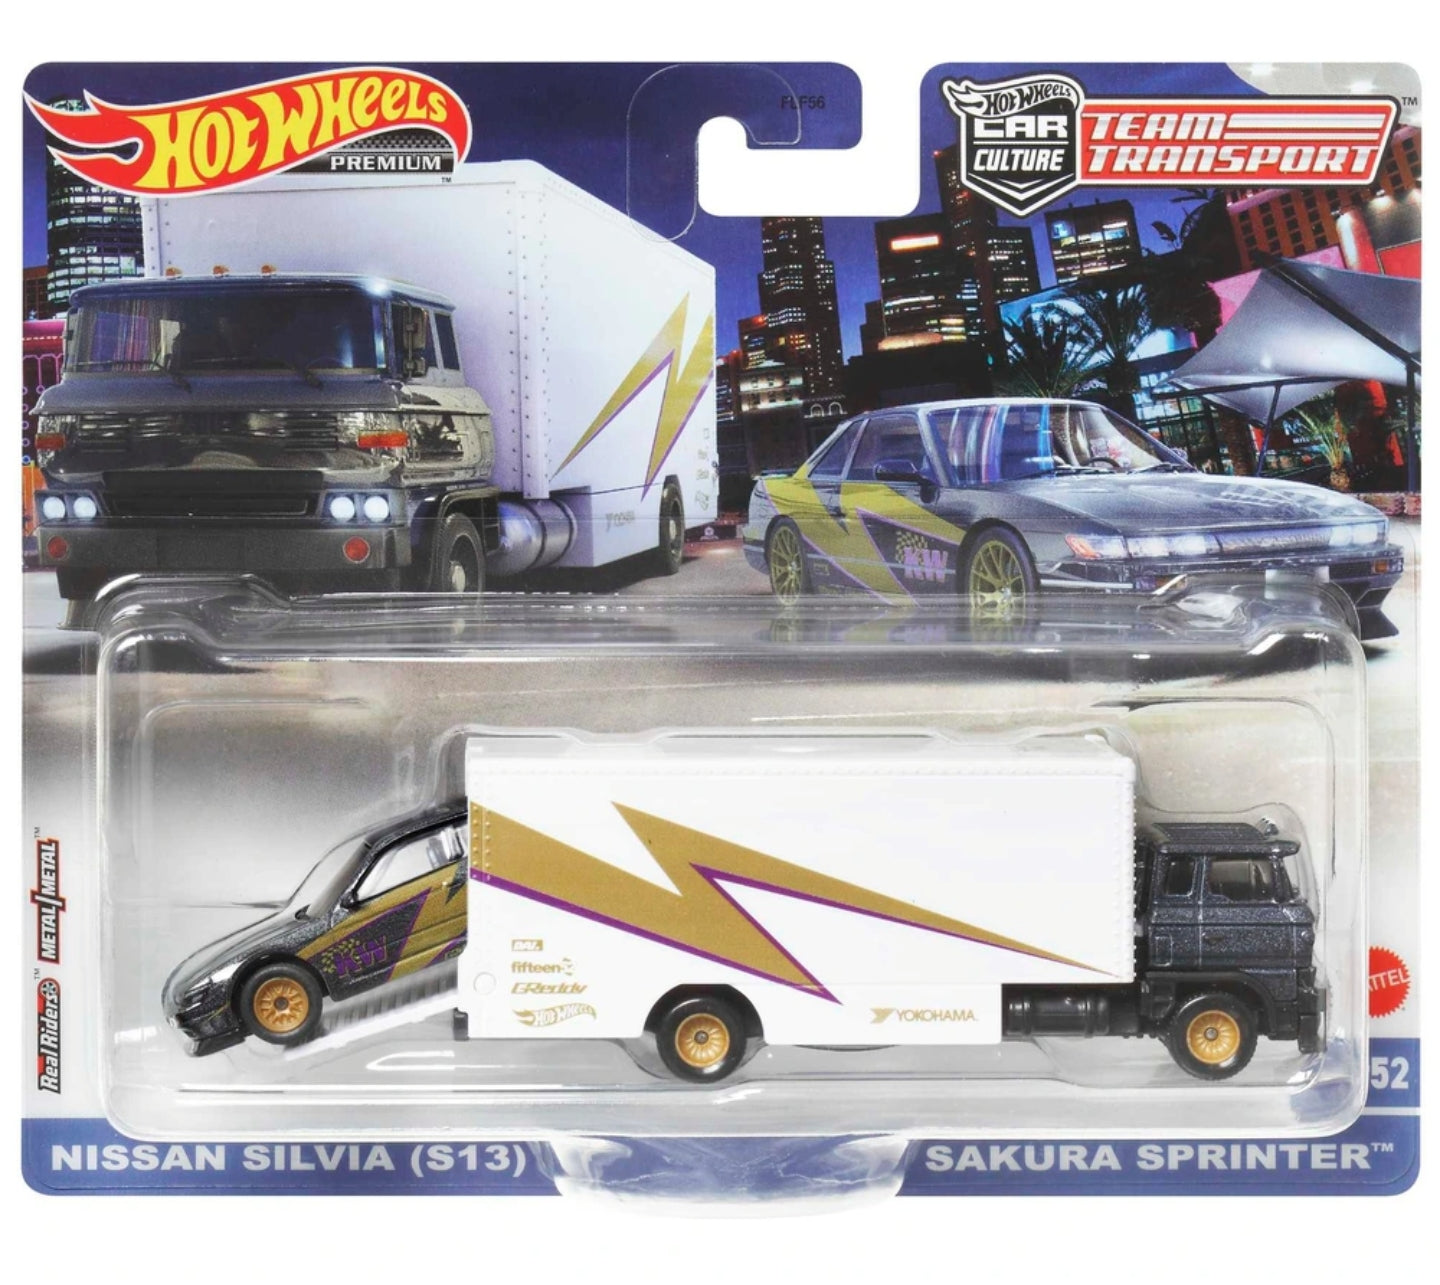 Hot Wheels Premium Team Transport Nissan Silvia (S13)  Sakura Sprinter Vehicle